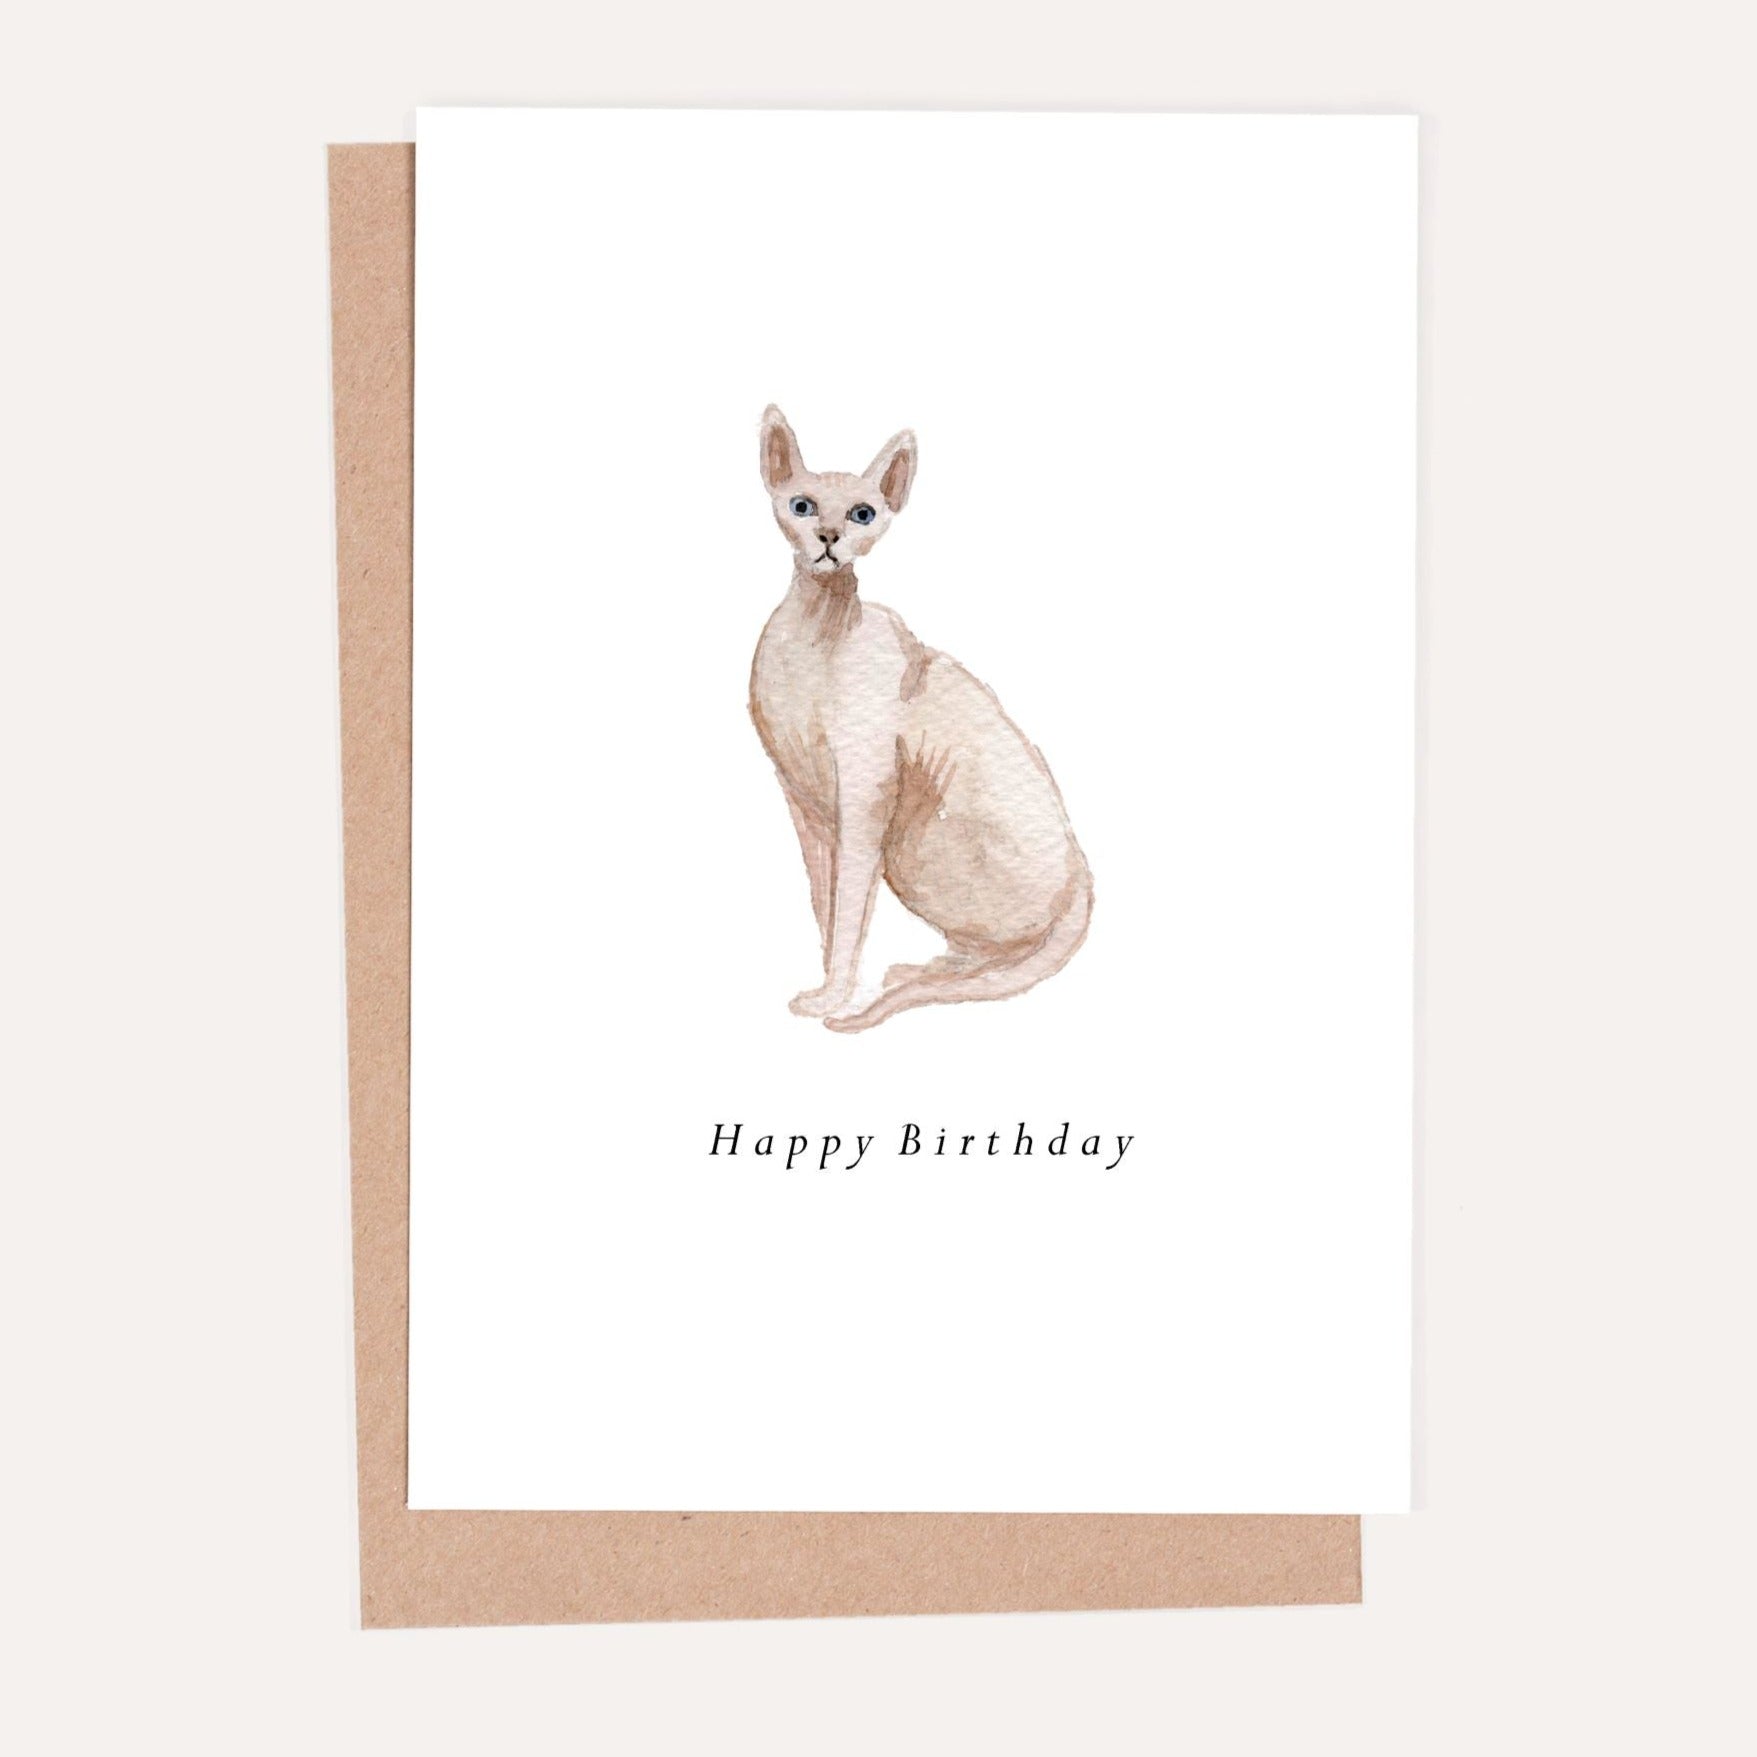 Sphynx Bald Cat Birthday Card by HeatherLucyJ. Pet Portrait Cat Greeting Card